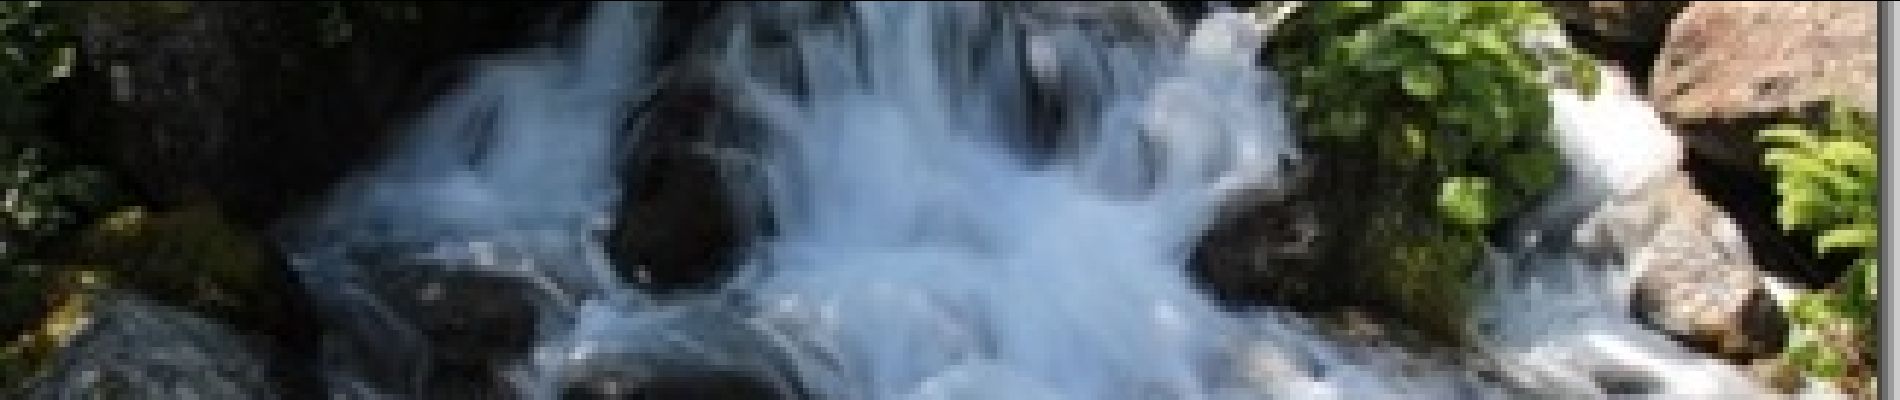 Tocht Stappen Chamonix-Mont-Blanc - La cascade du dard - Photo